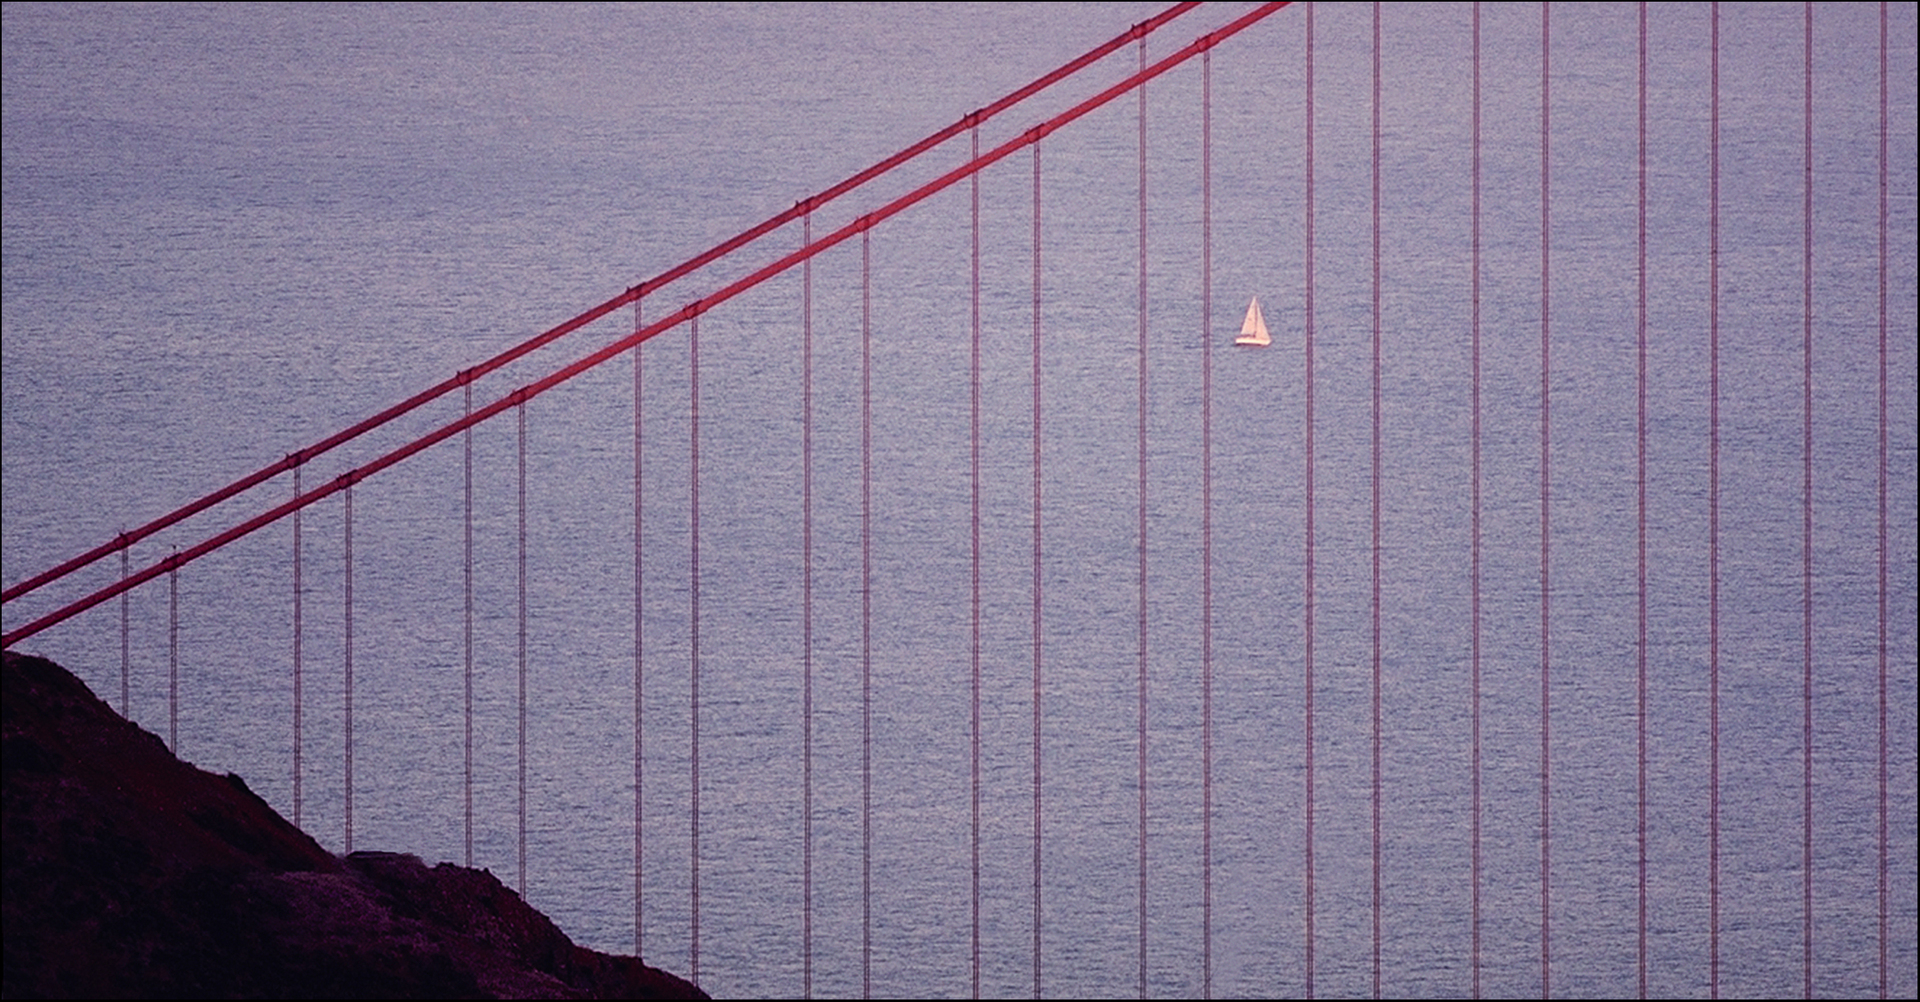 Sail Boat and Golden Gate Bridge, CA